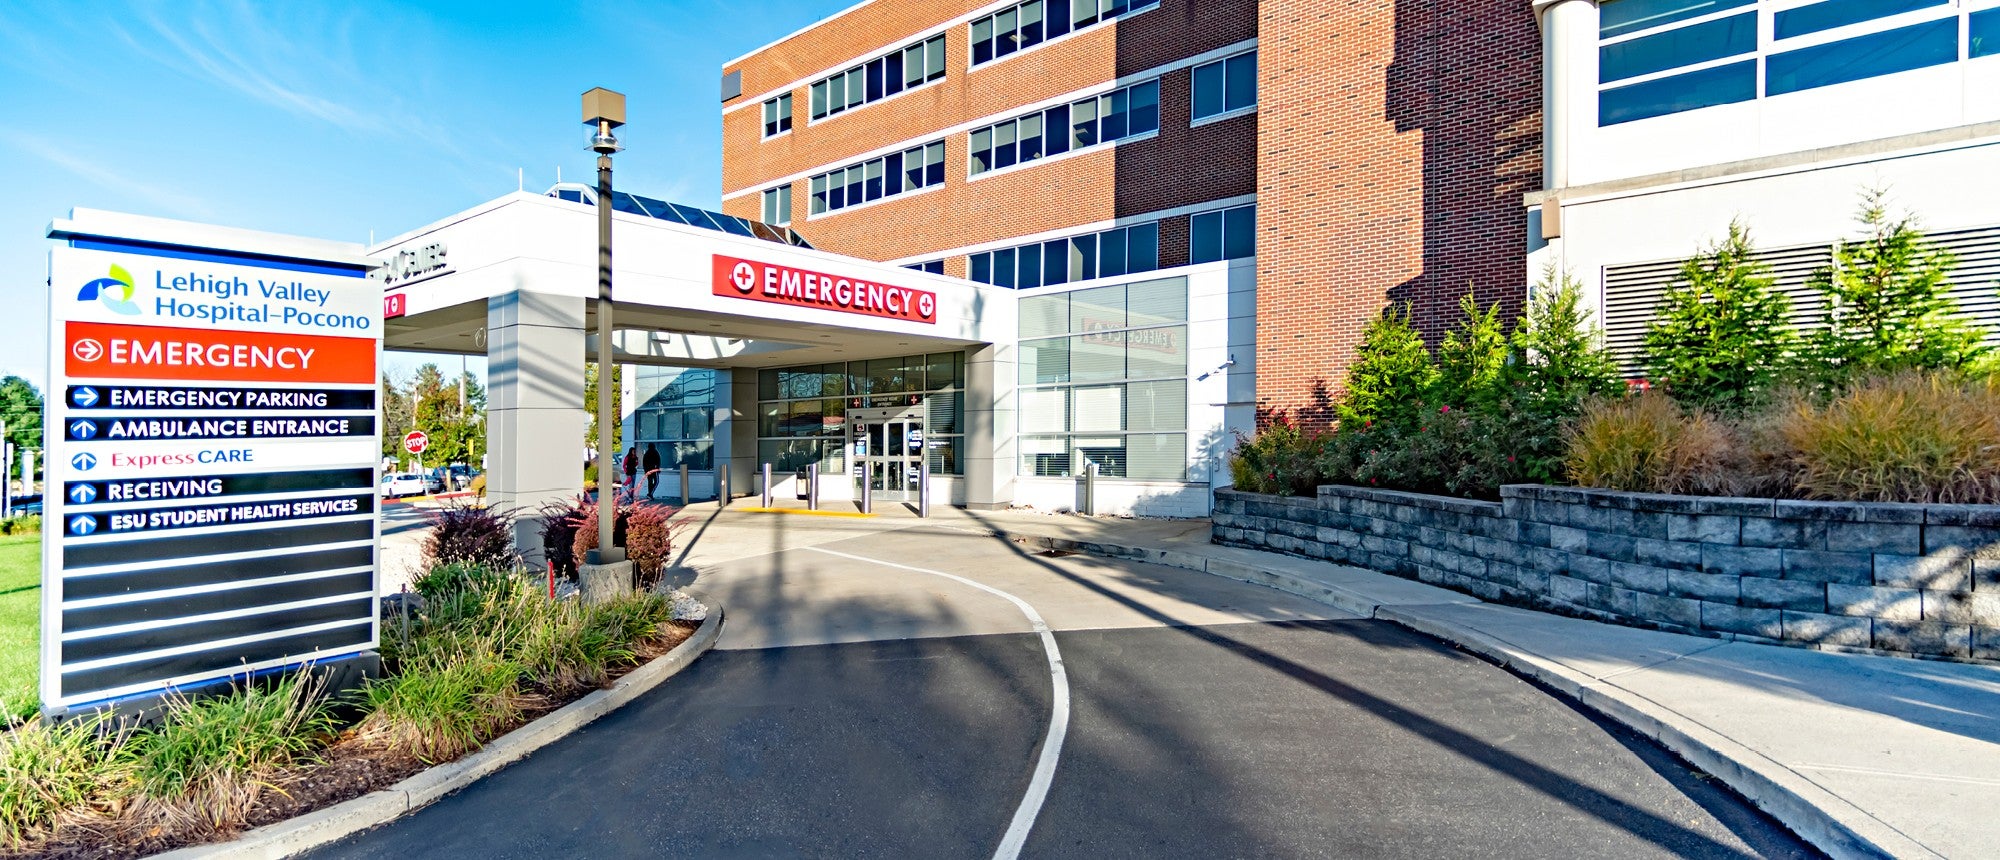 Emergency room entrance at Lehigh Valley Hospital–Pocono Mattioli Emergency Center